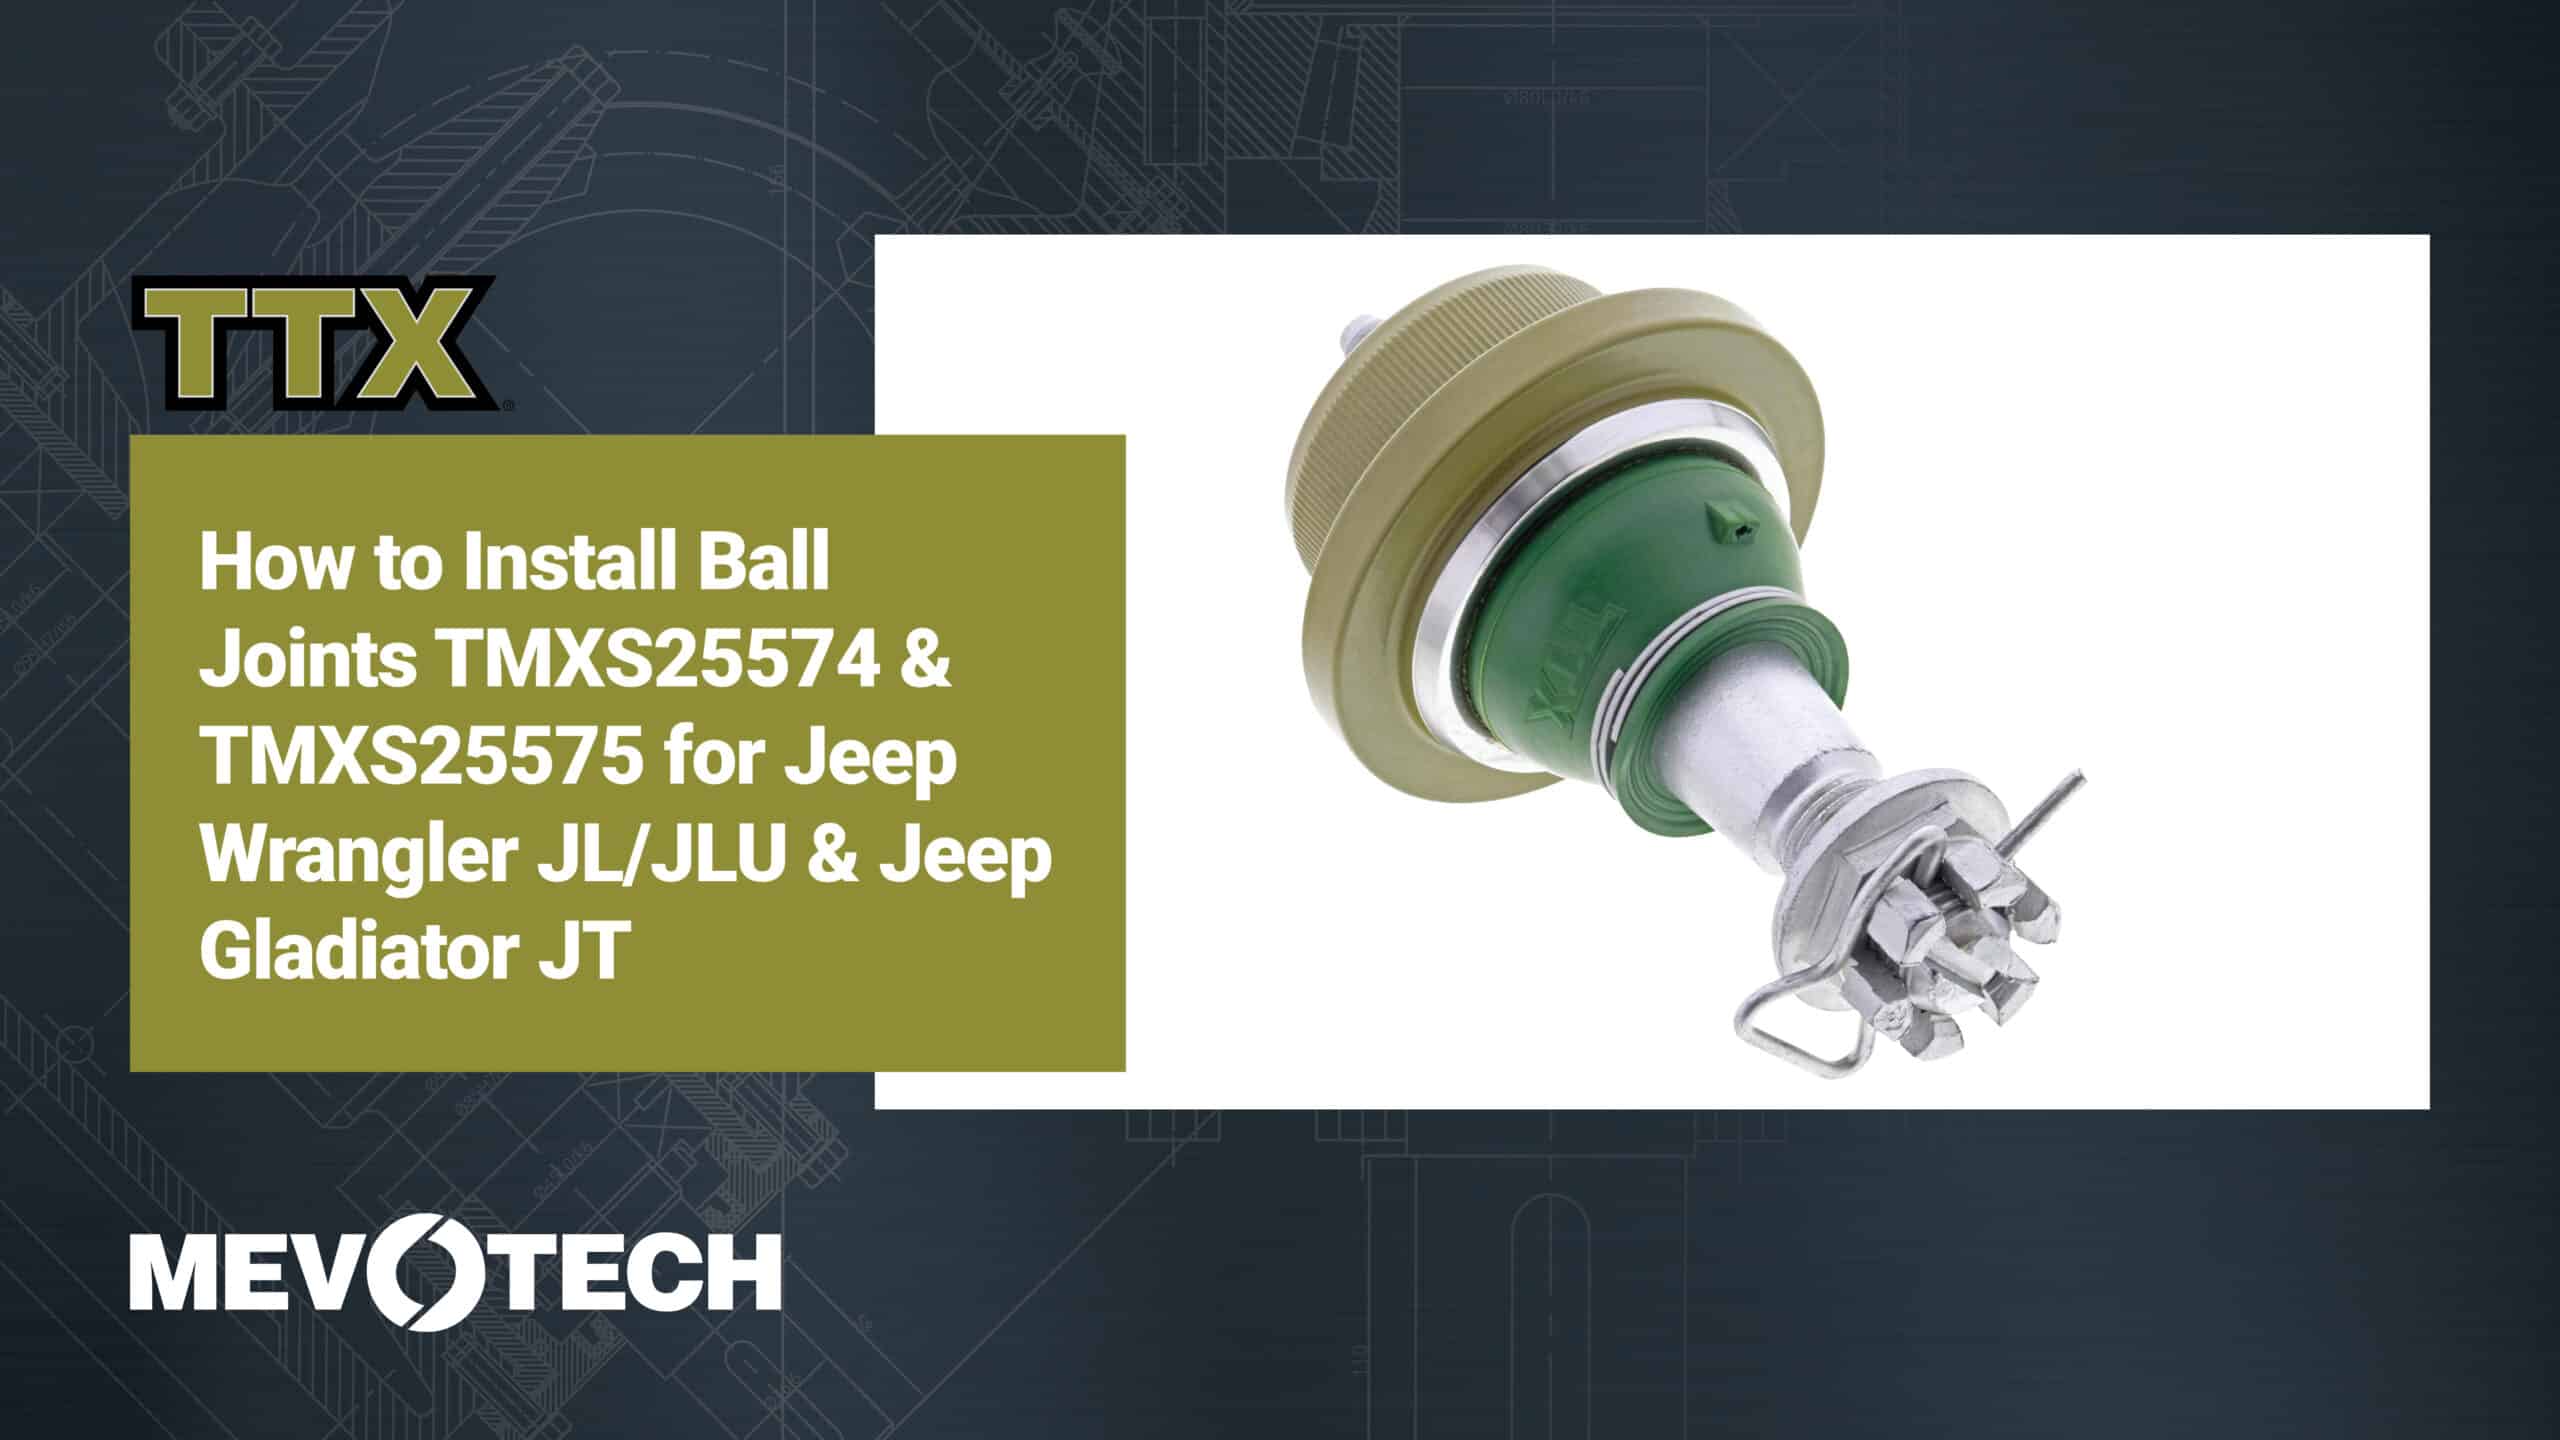 How to Install TTX™ Ball Joints TMXS25574 & TMXS25575